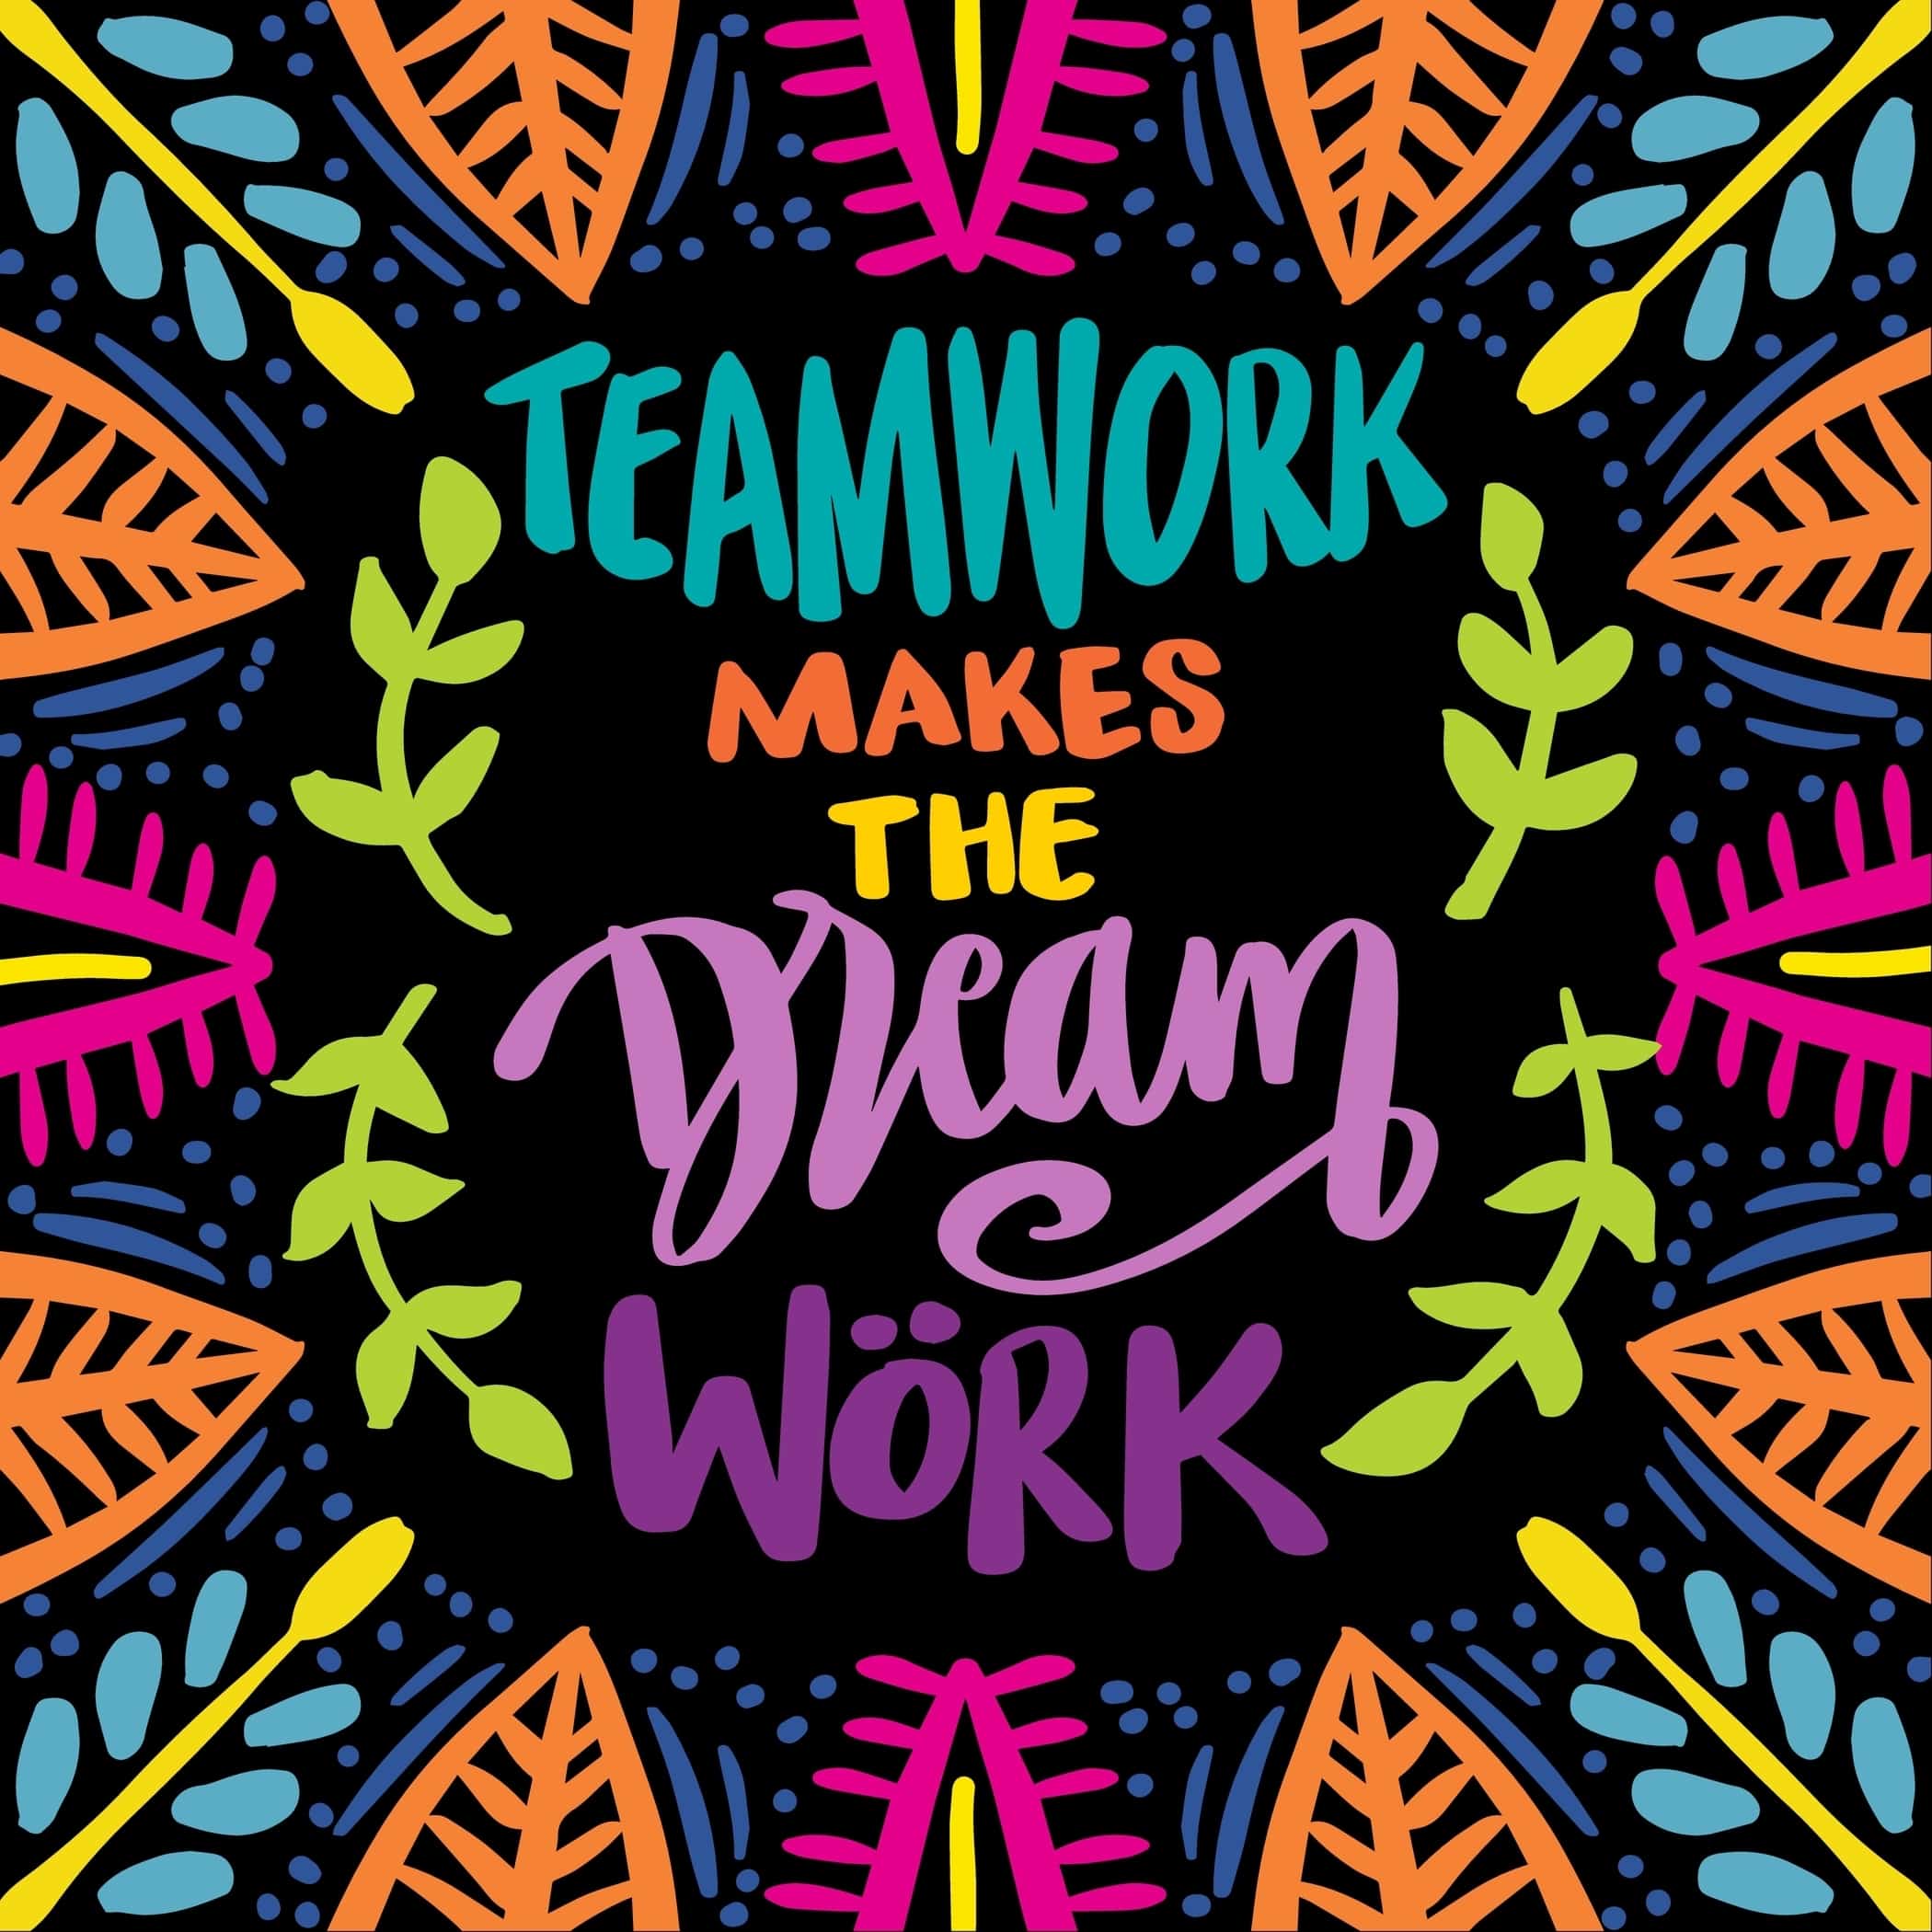 teamwork is dreamwork essay